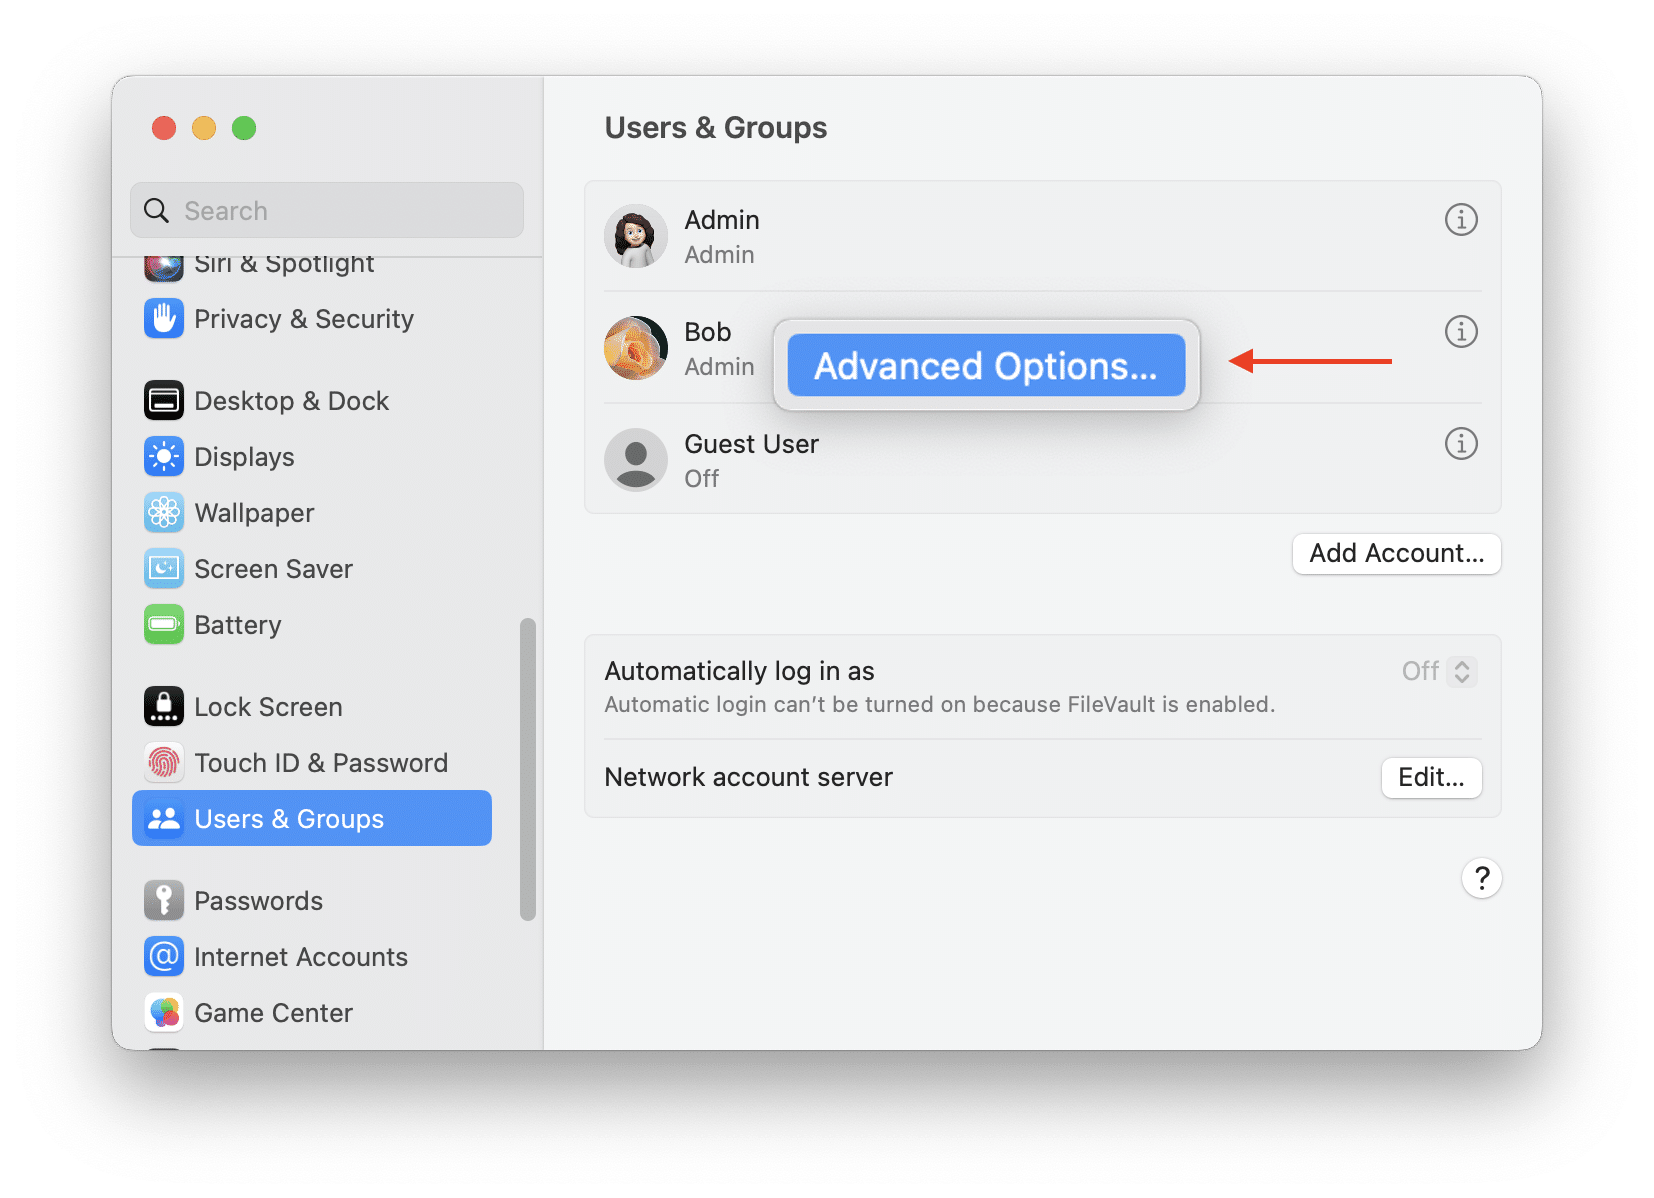 Advanced options for a Mac user